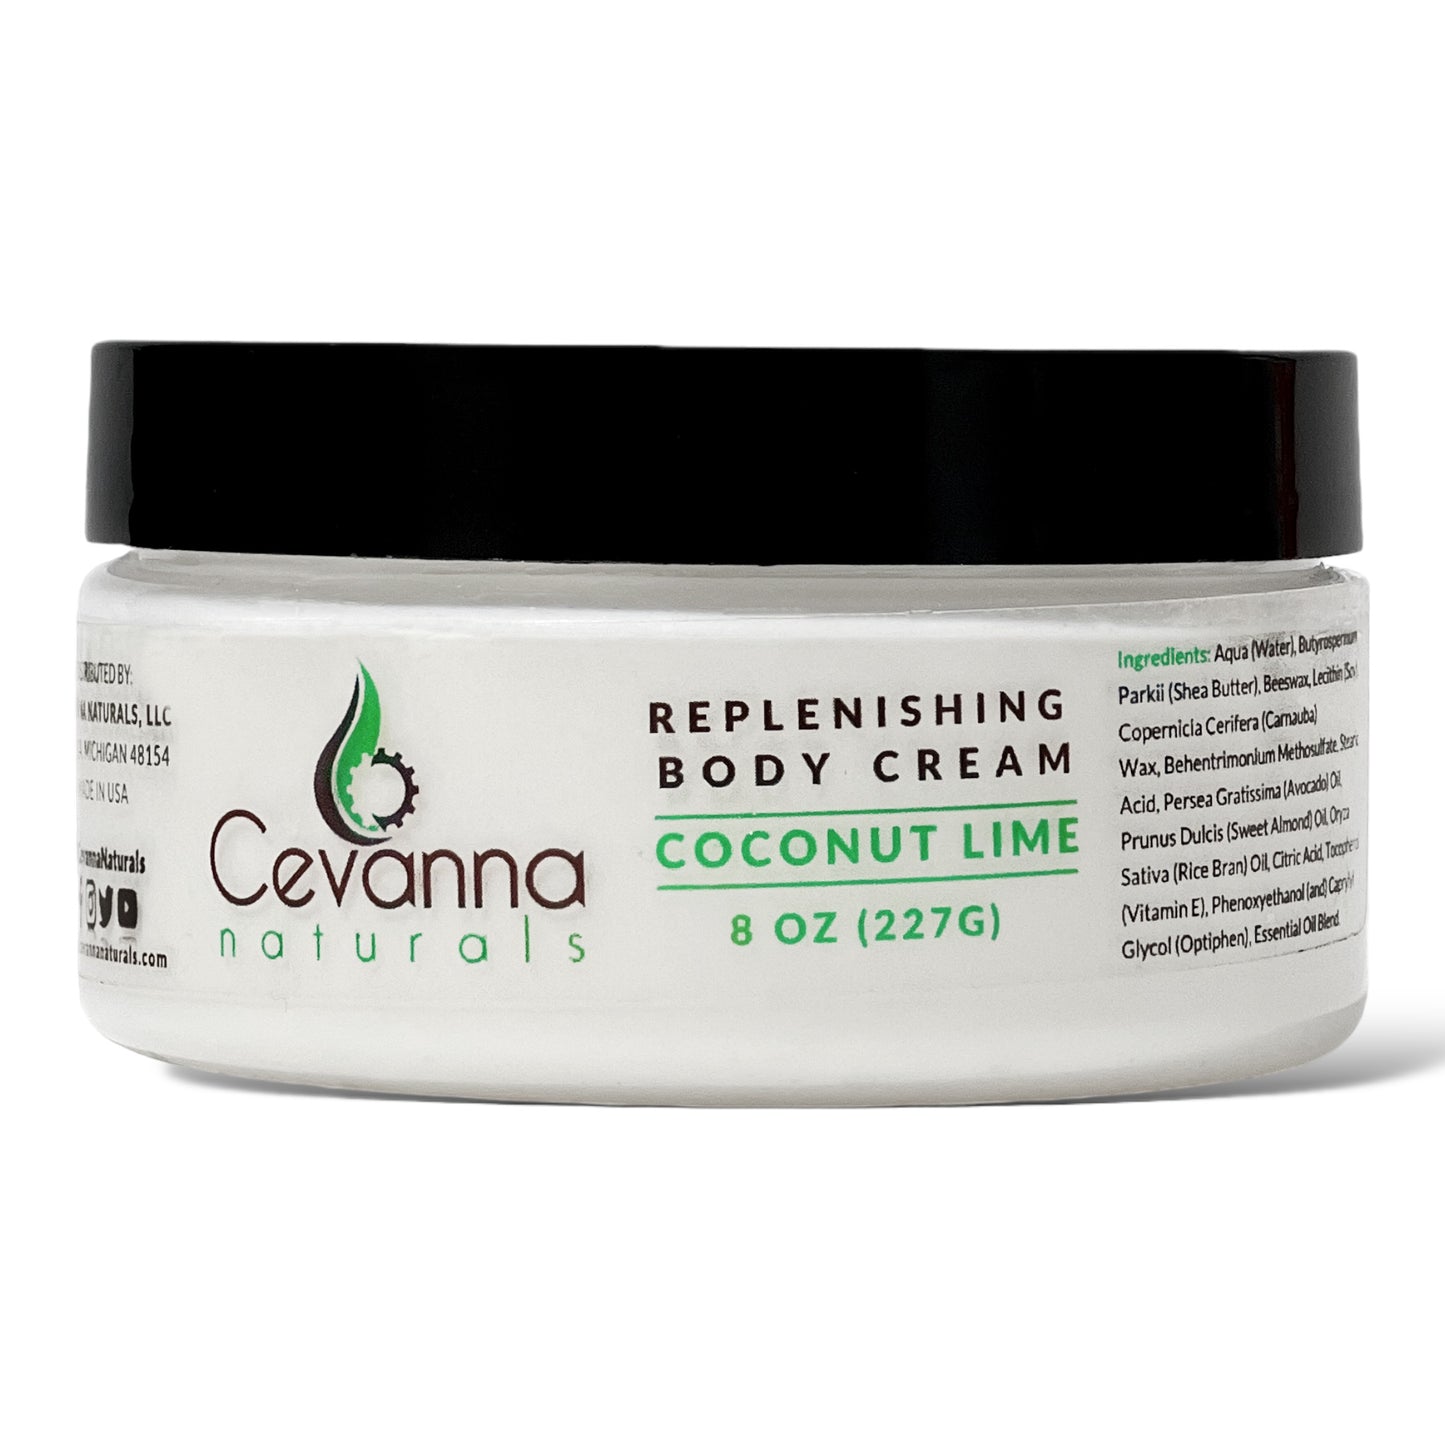 Replenishing Body Cream (Coconut Lime)